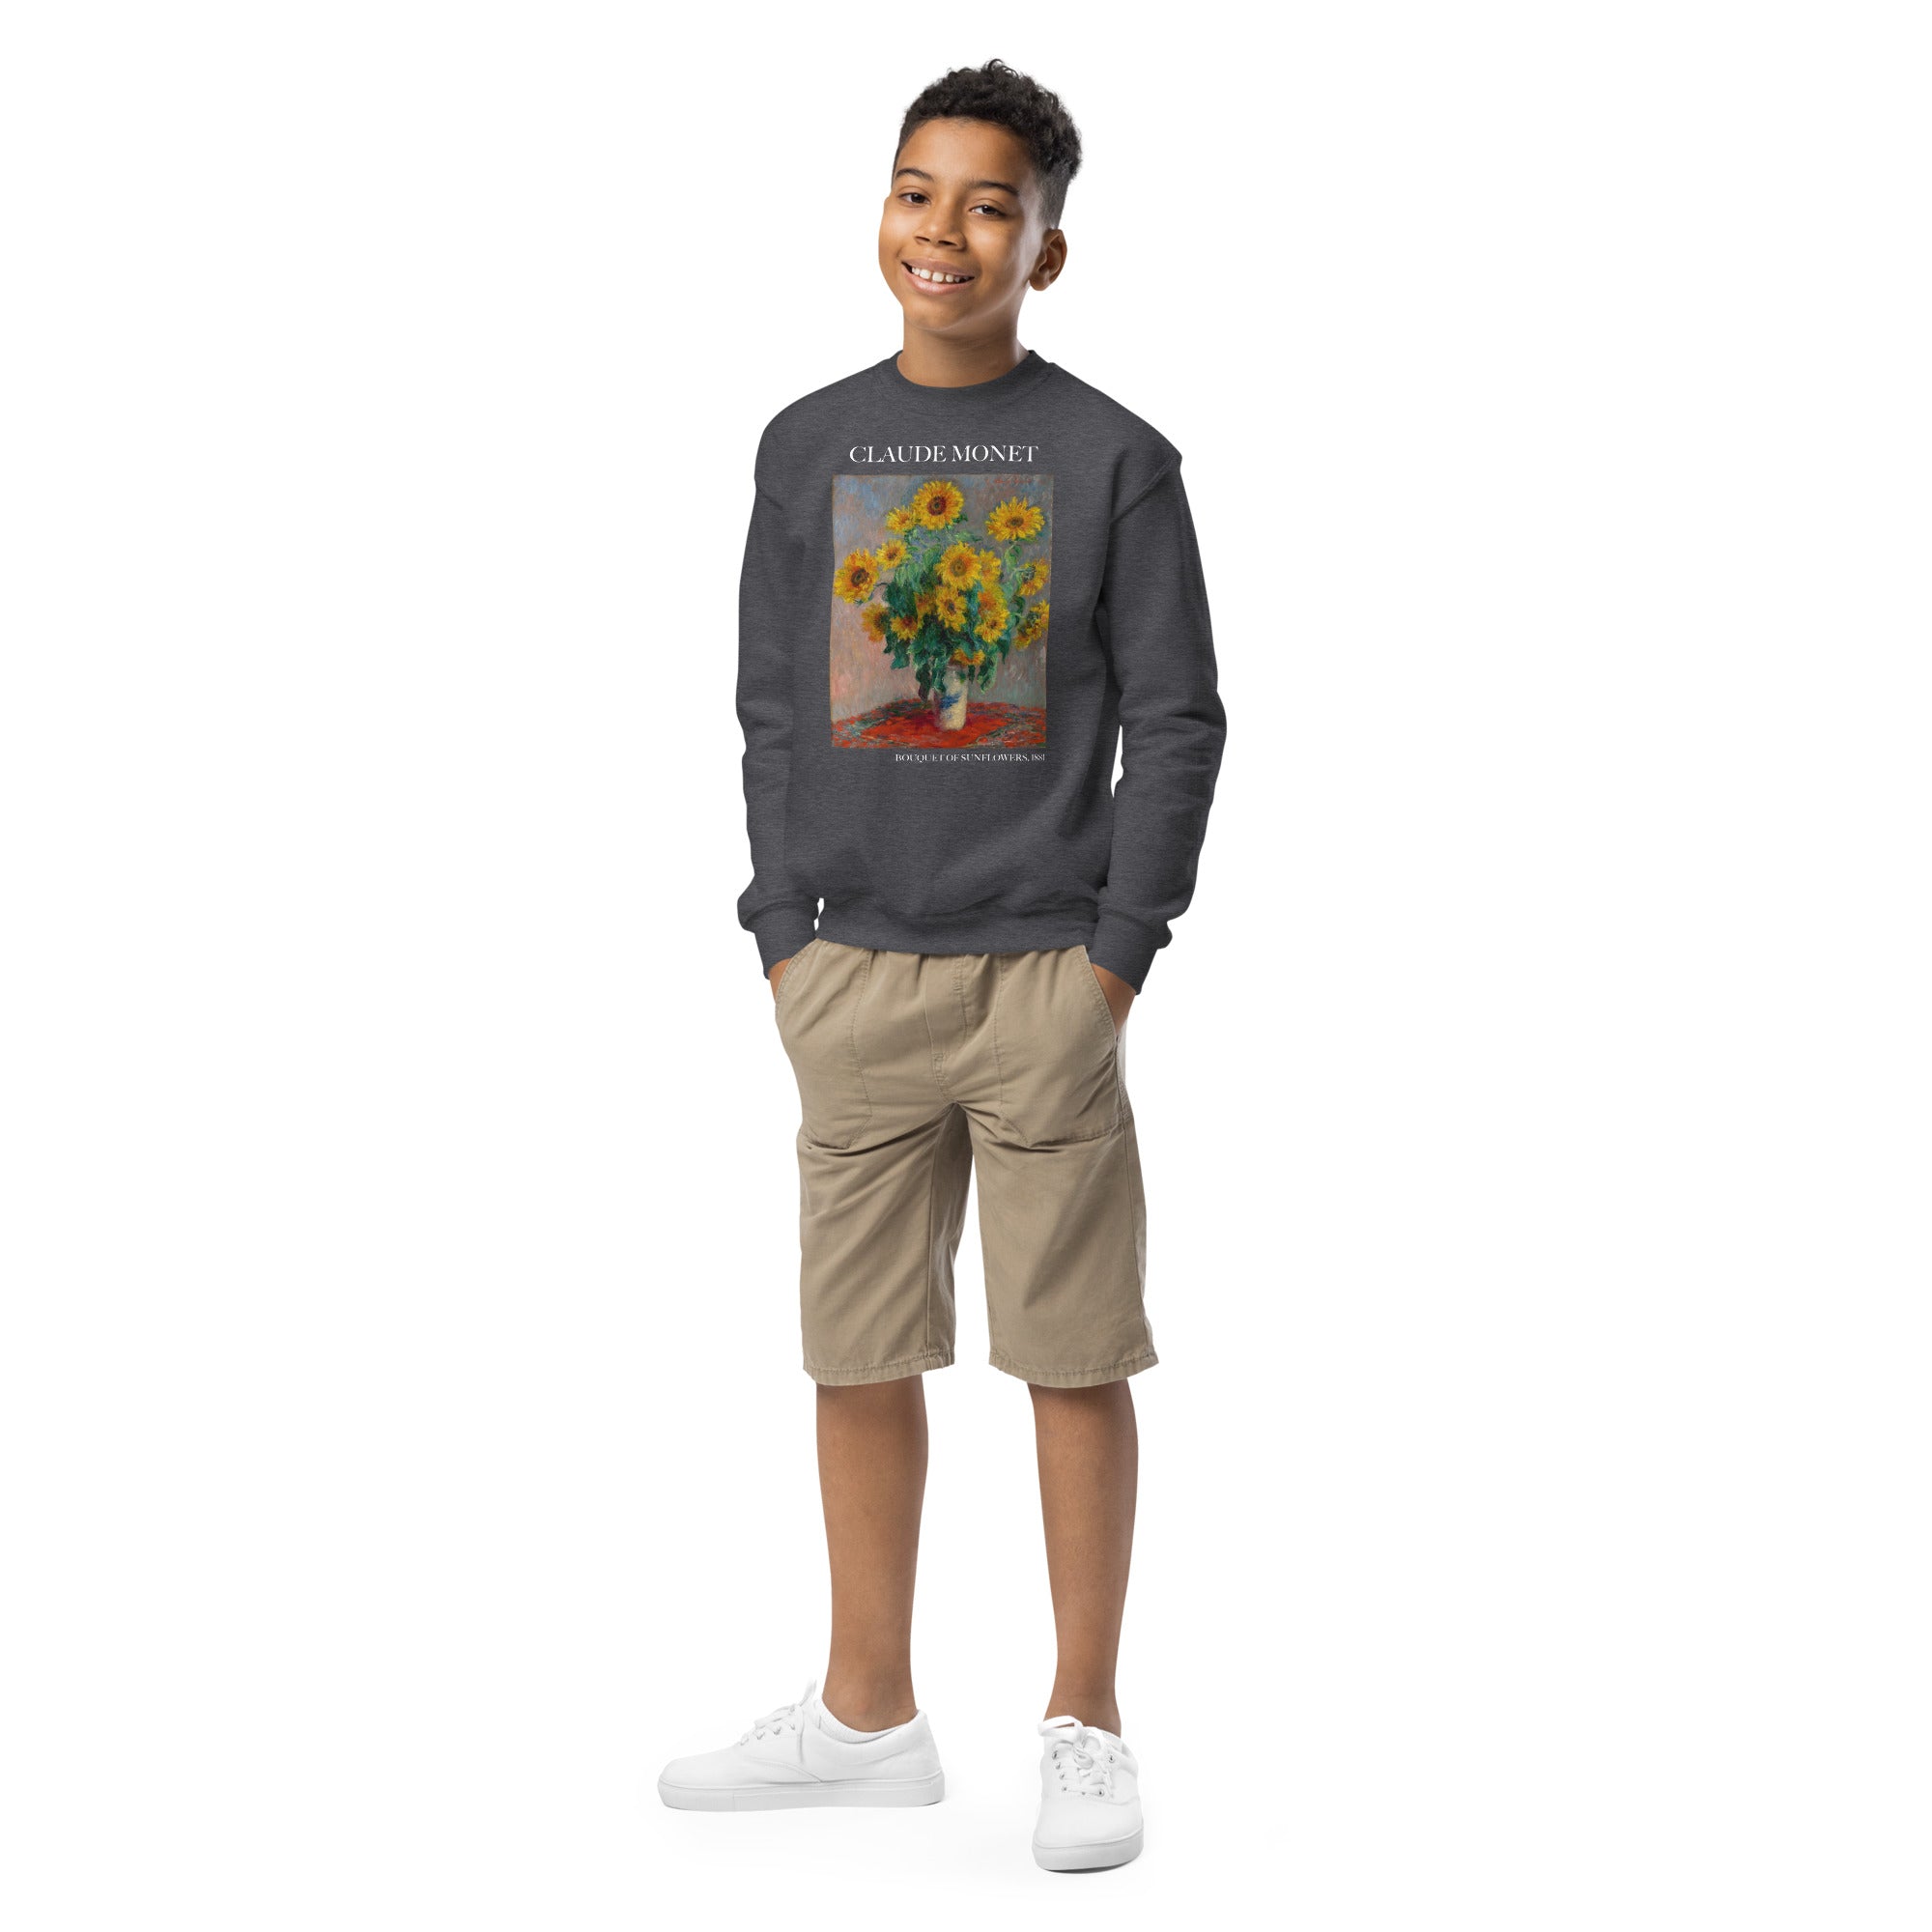 Claude Monet 'Bouquet of Sunflowers' Famous Painting Crewneck Sweatshirt | Premium Youth Art Sweatshirt